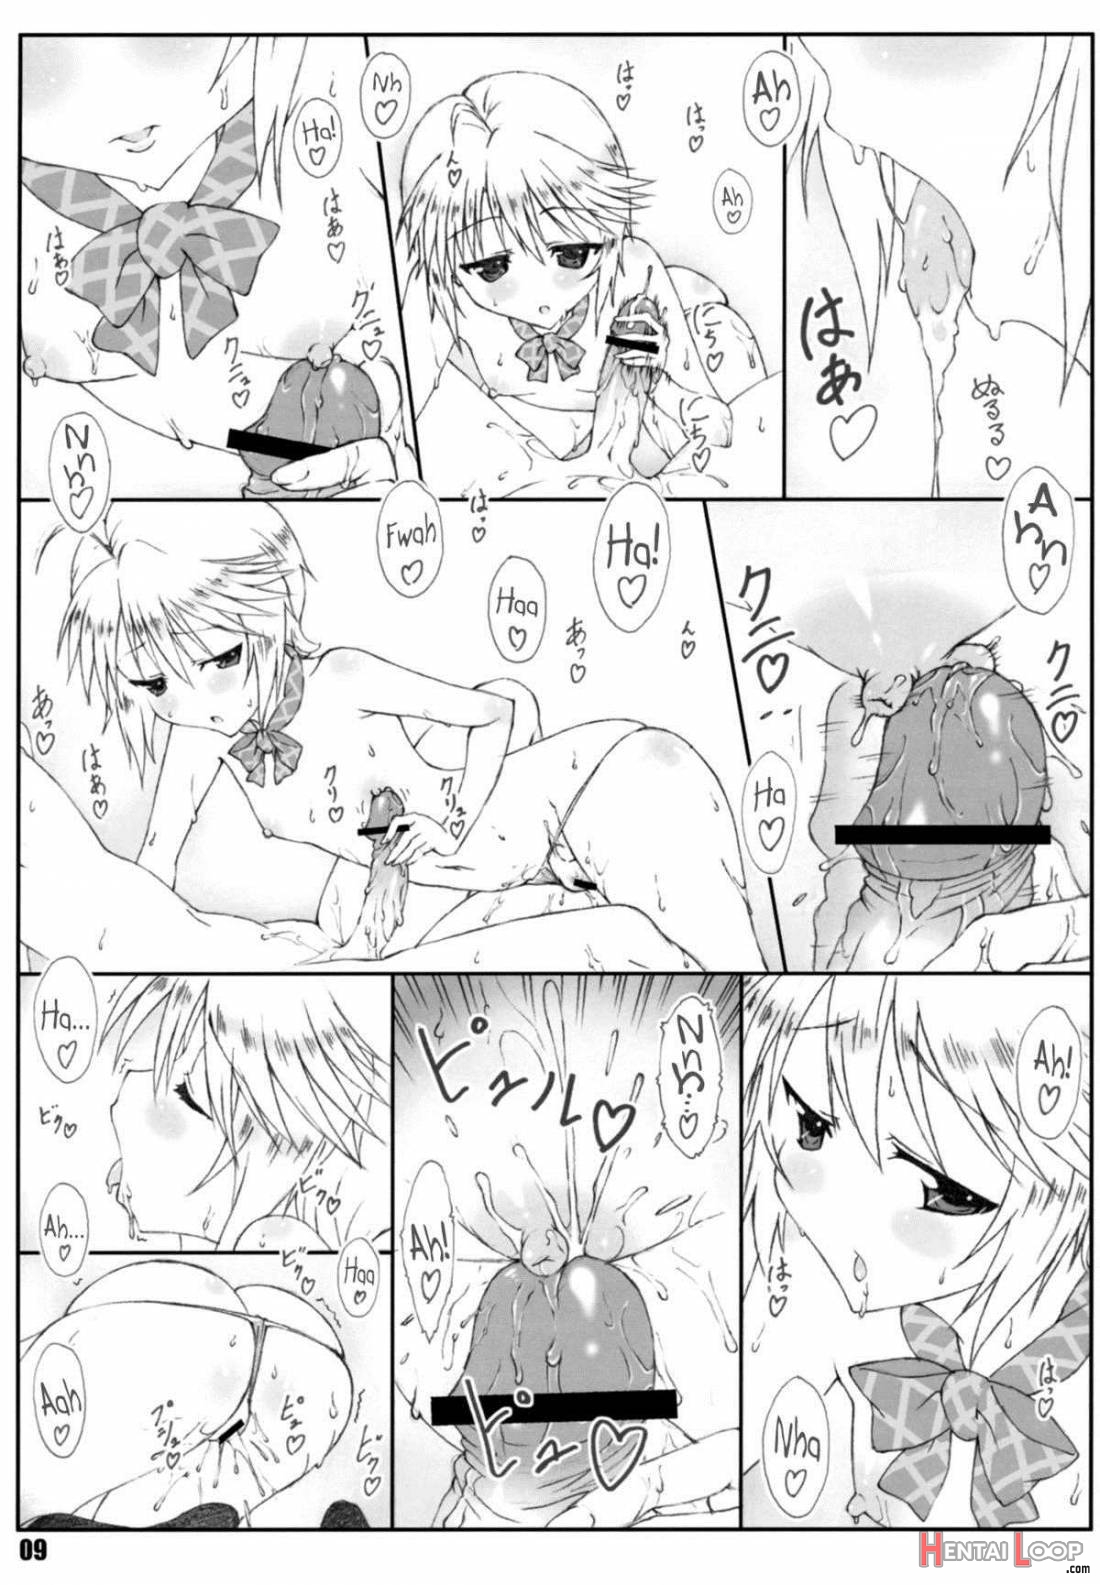 Minamoto-san 3 page 8